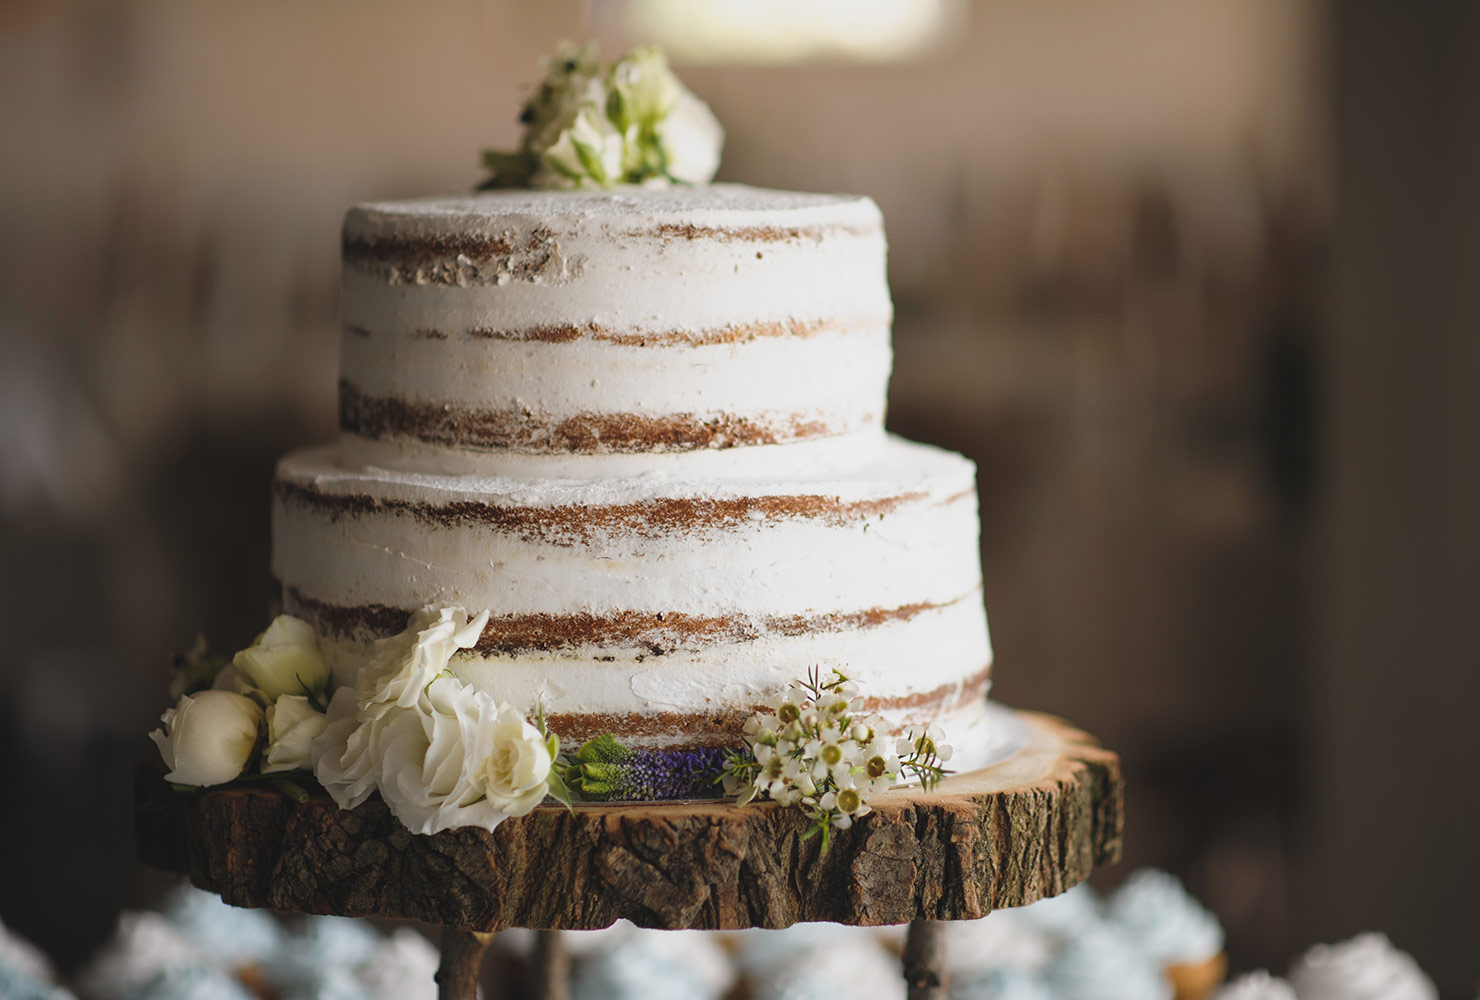 Rustic wedding cake on wood display.